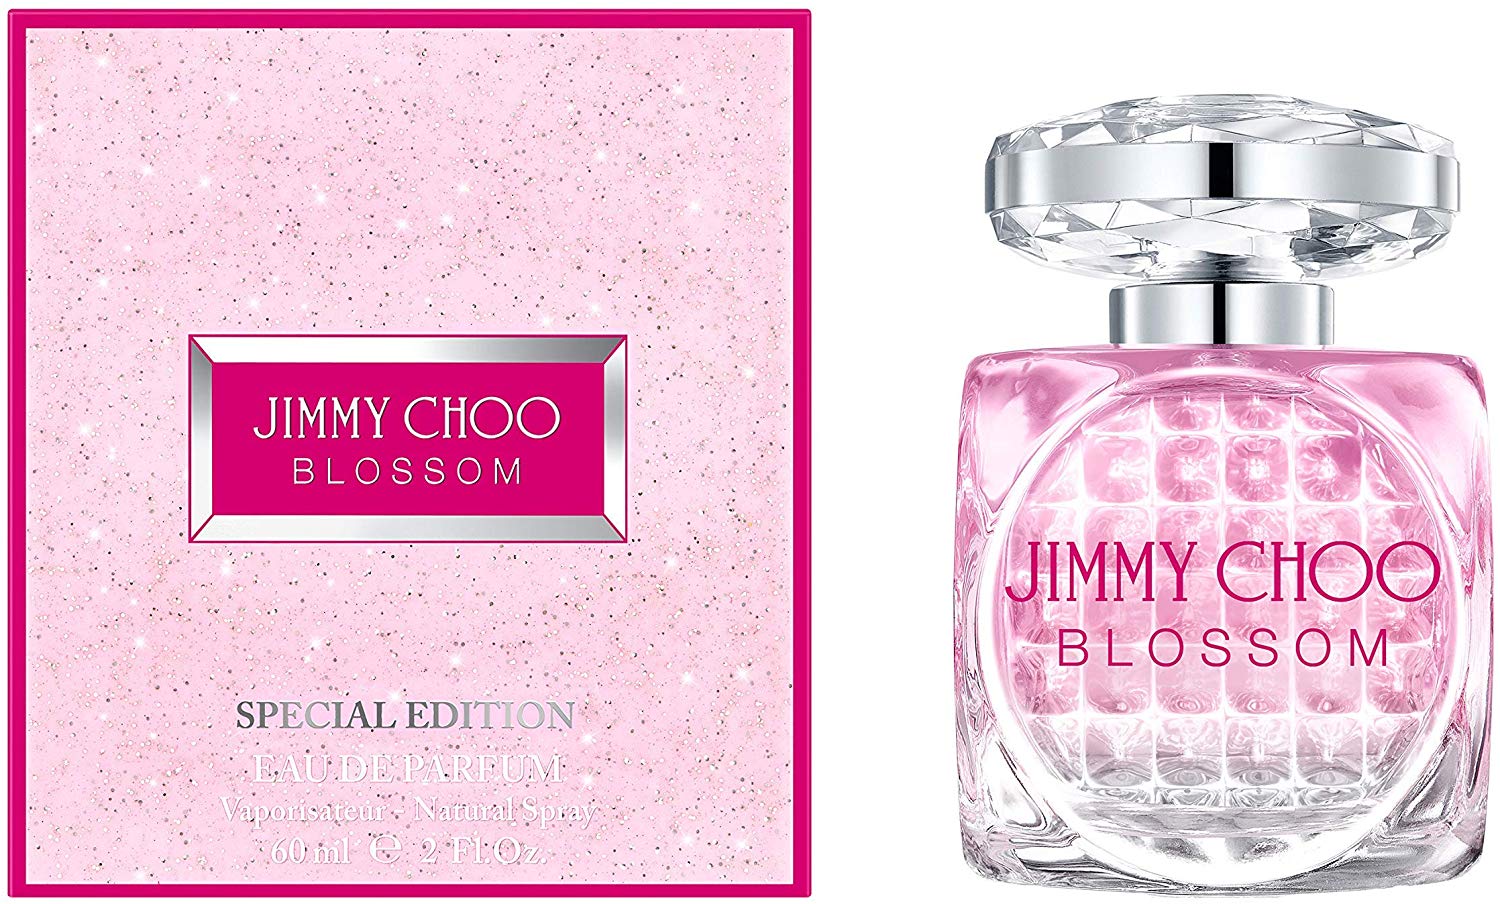 Jimmy Choo Jimmy Choo Blossom Special Edition Eau de Parfum 60ml Spray - Peacock Bazaar